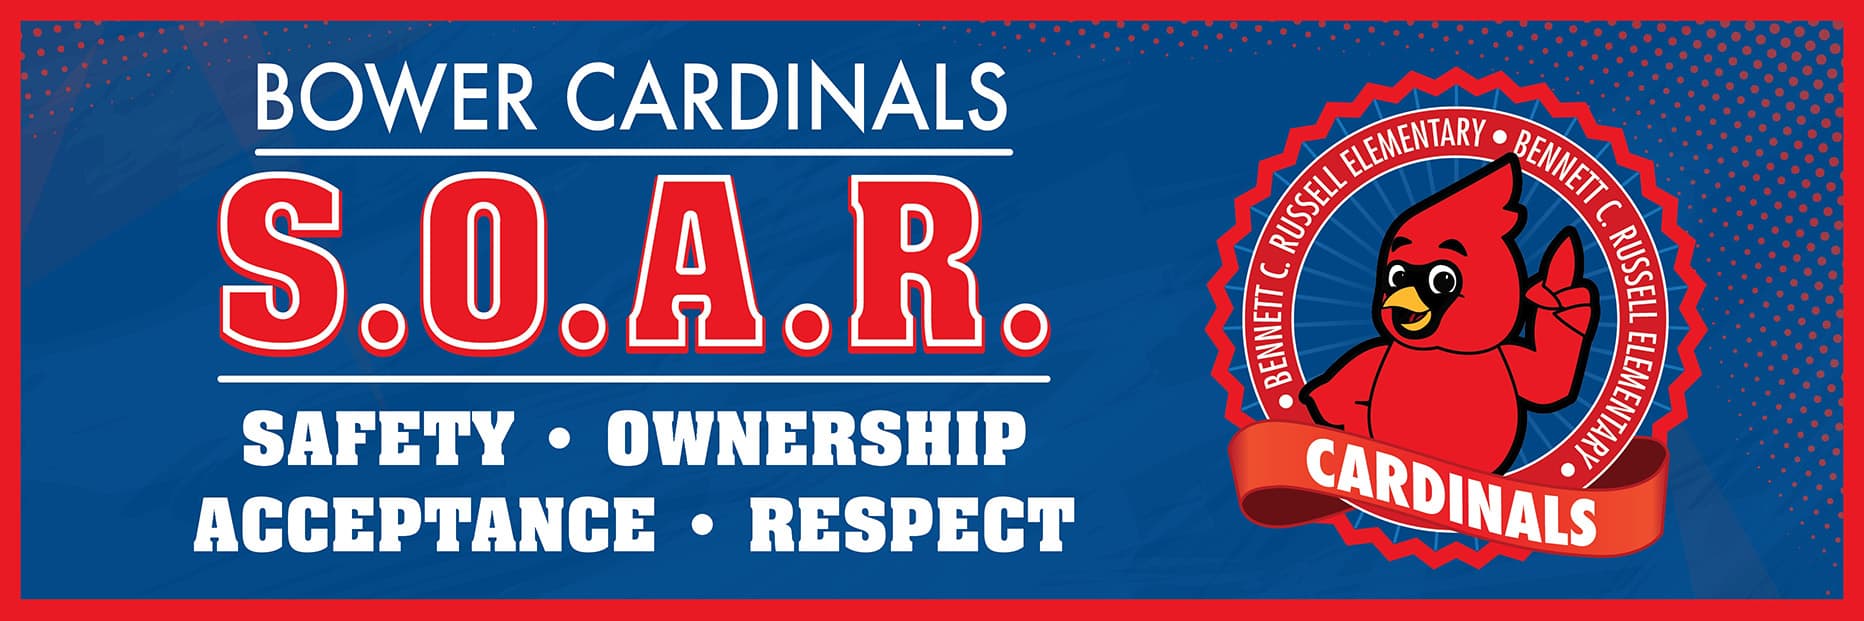 Theme-Banner-Cardinal2